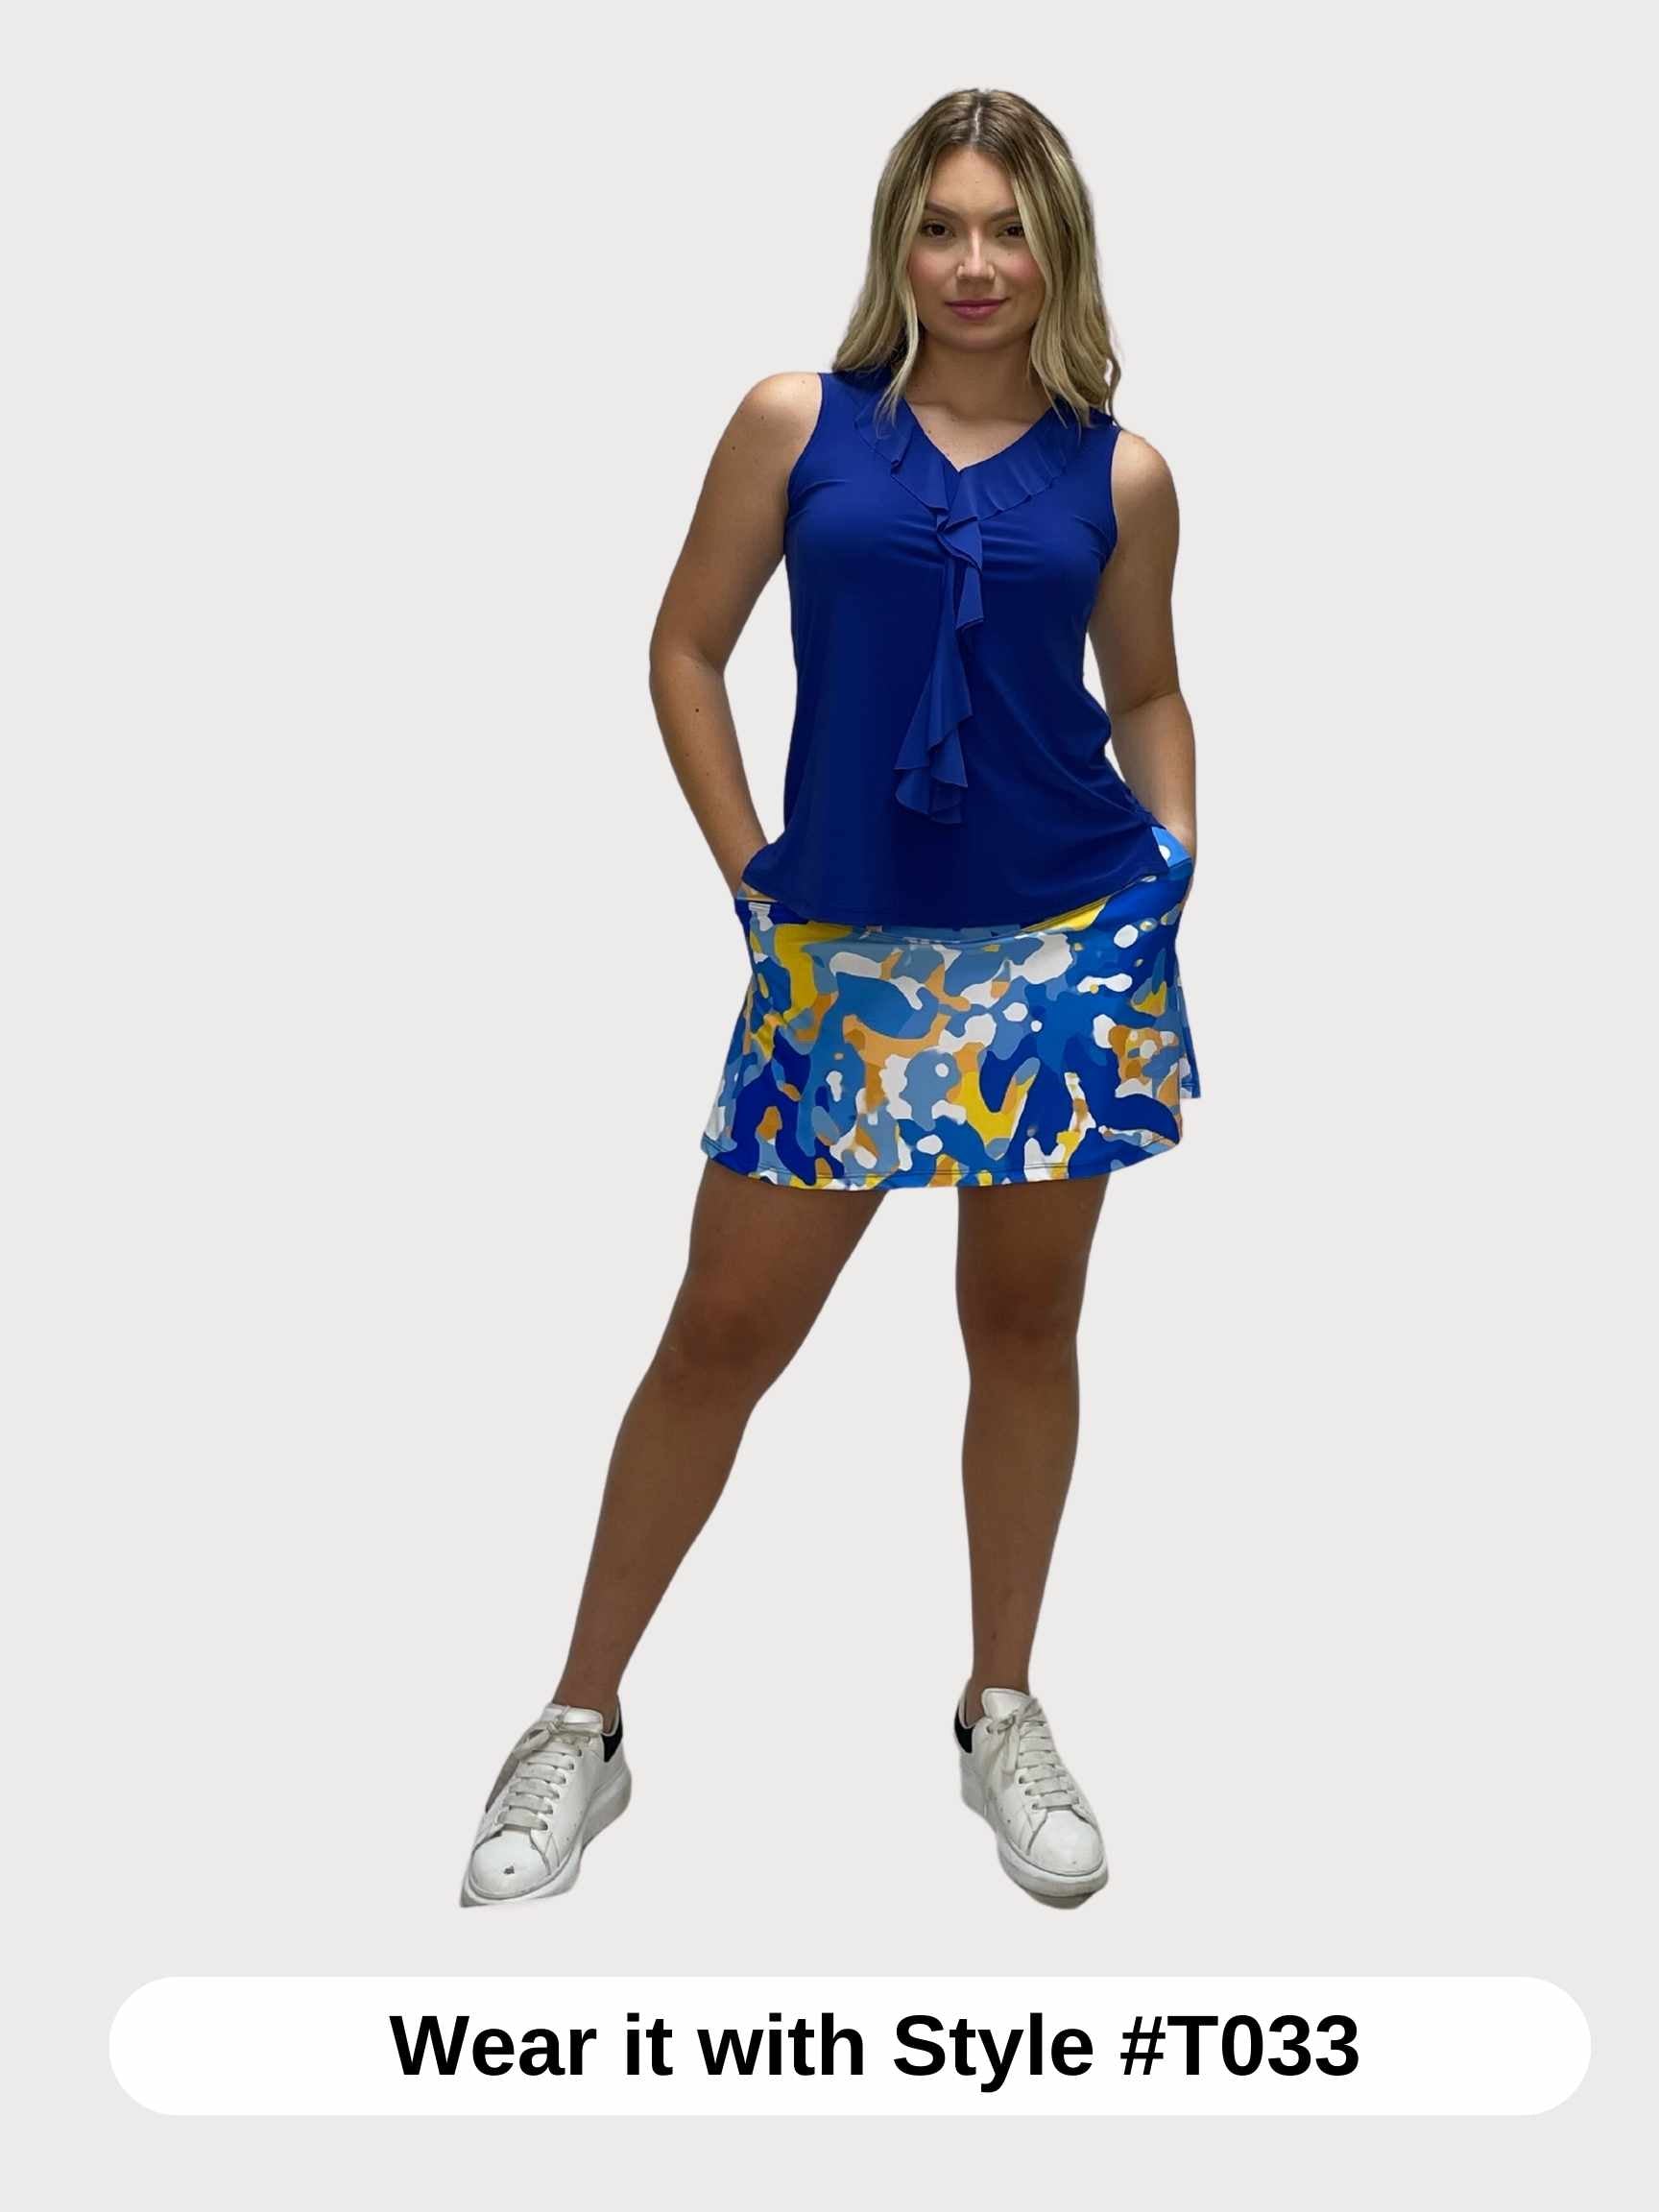 FASHQUE - Women Digital Print Golf Short Skort with Pockets - SK2013